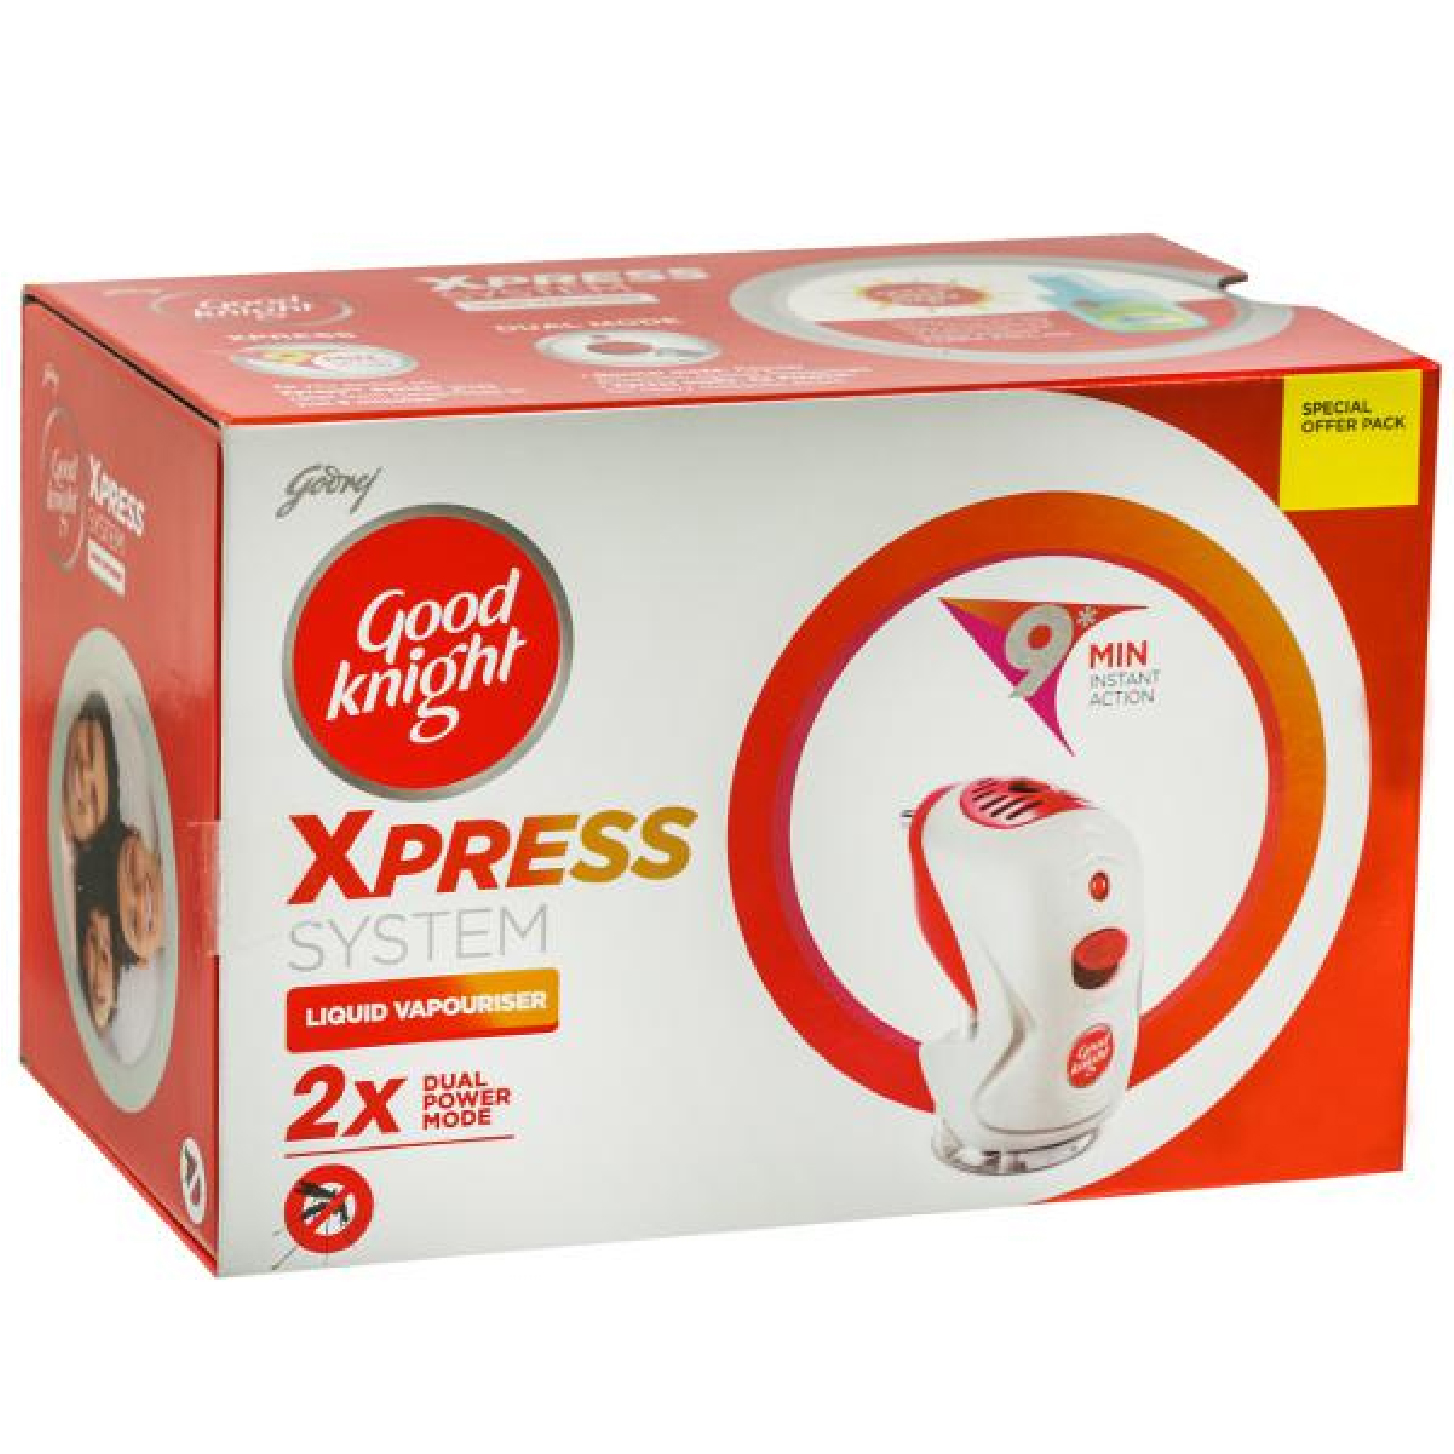 Good Knight Xpress System Liquid Vaporizer